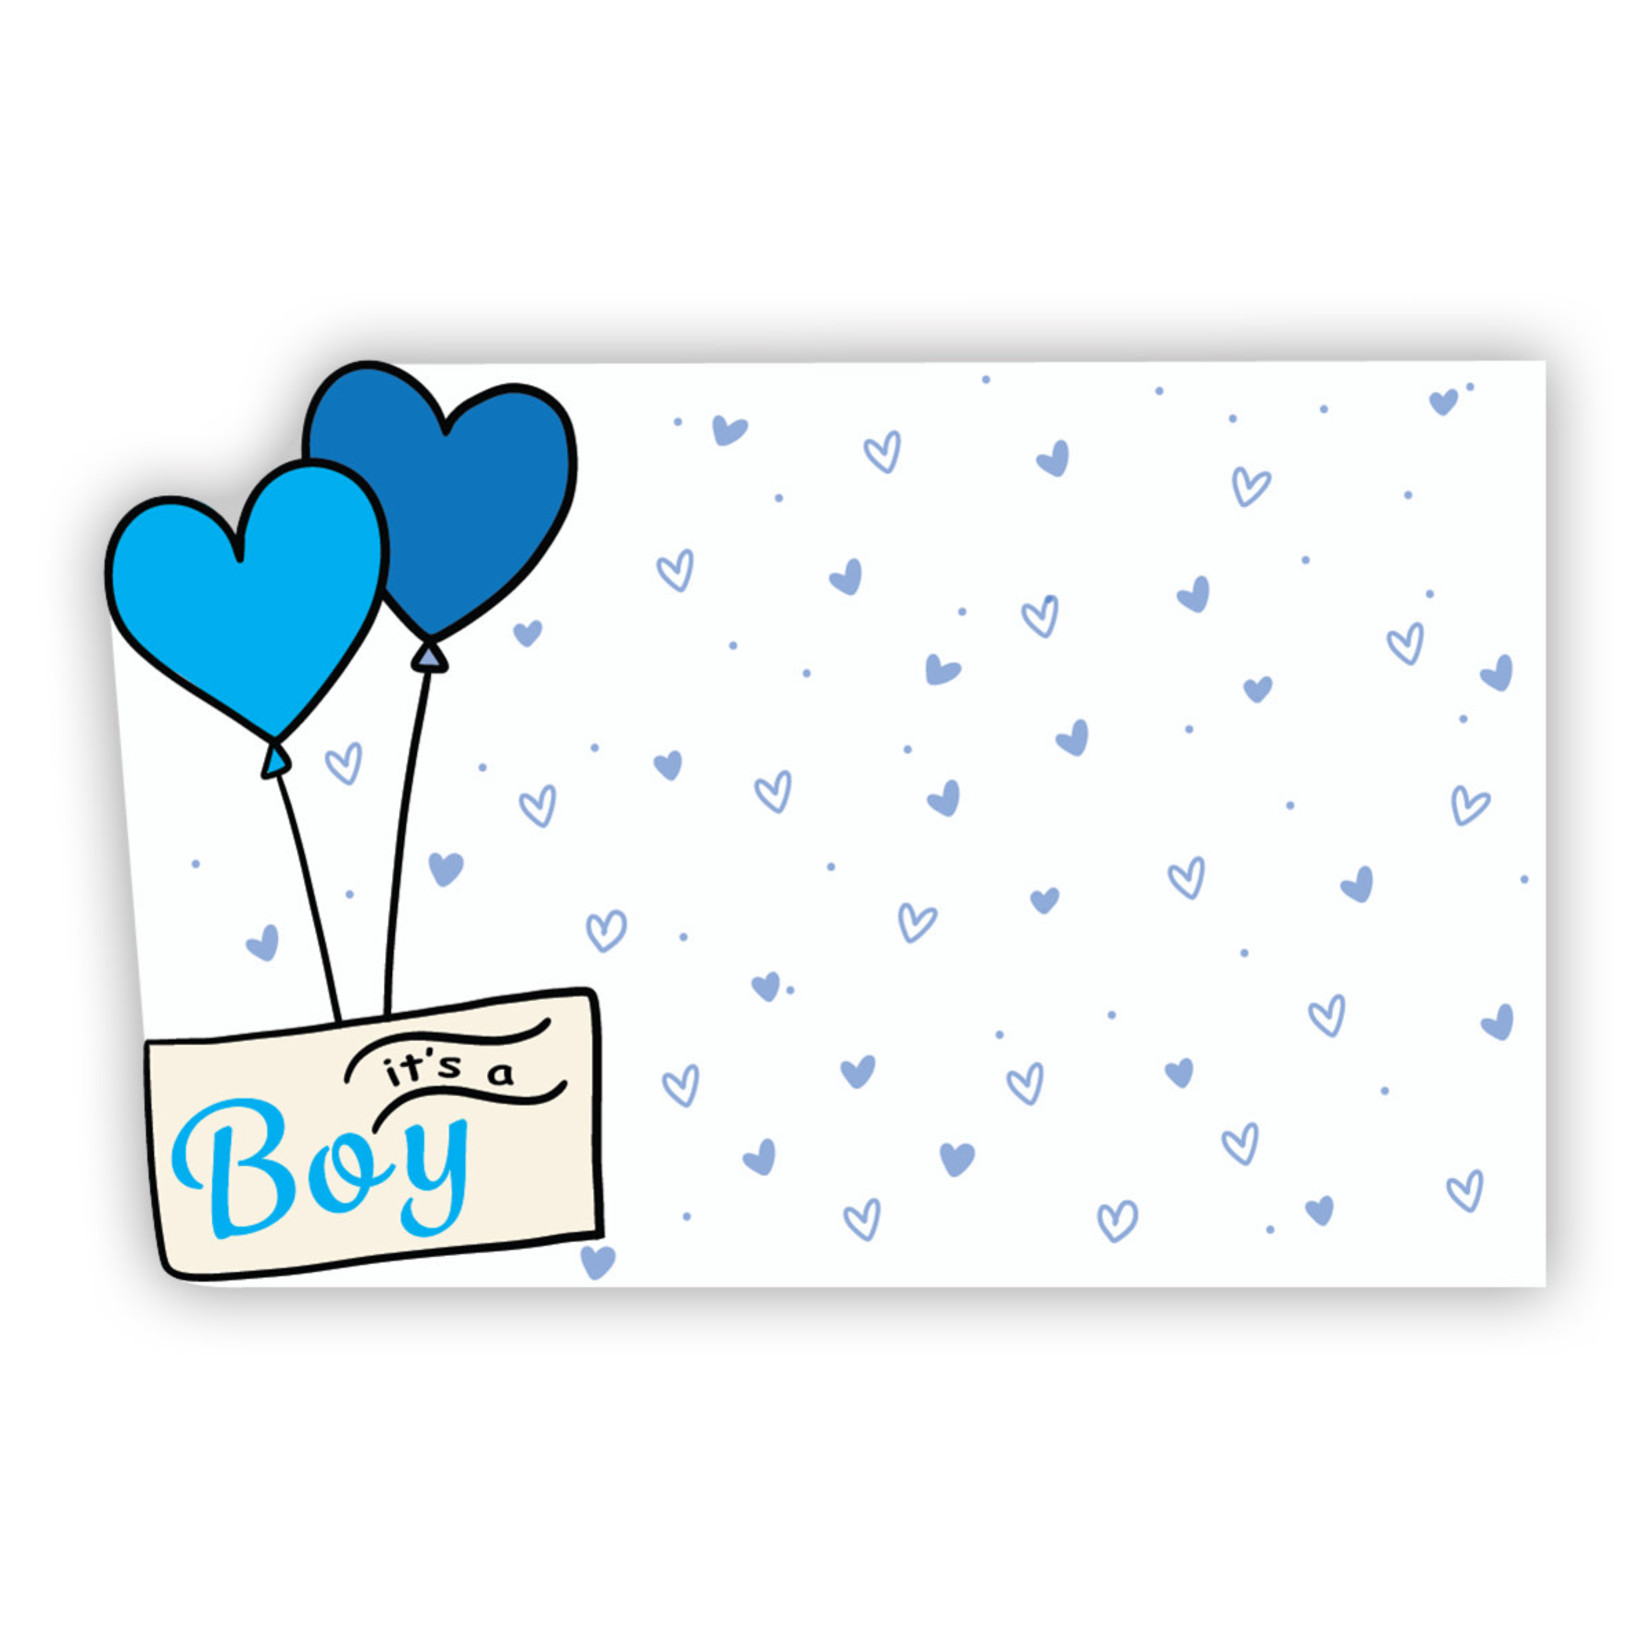 "It's a Boy!" : Blue heart balloons, foiled sent